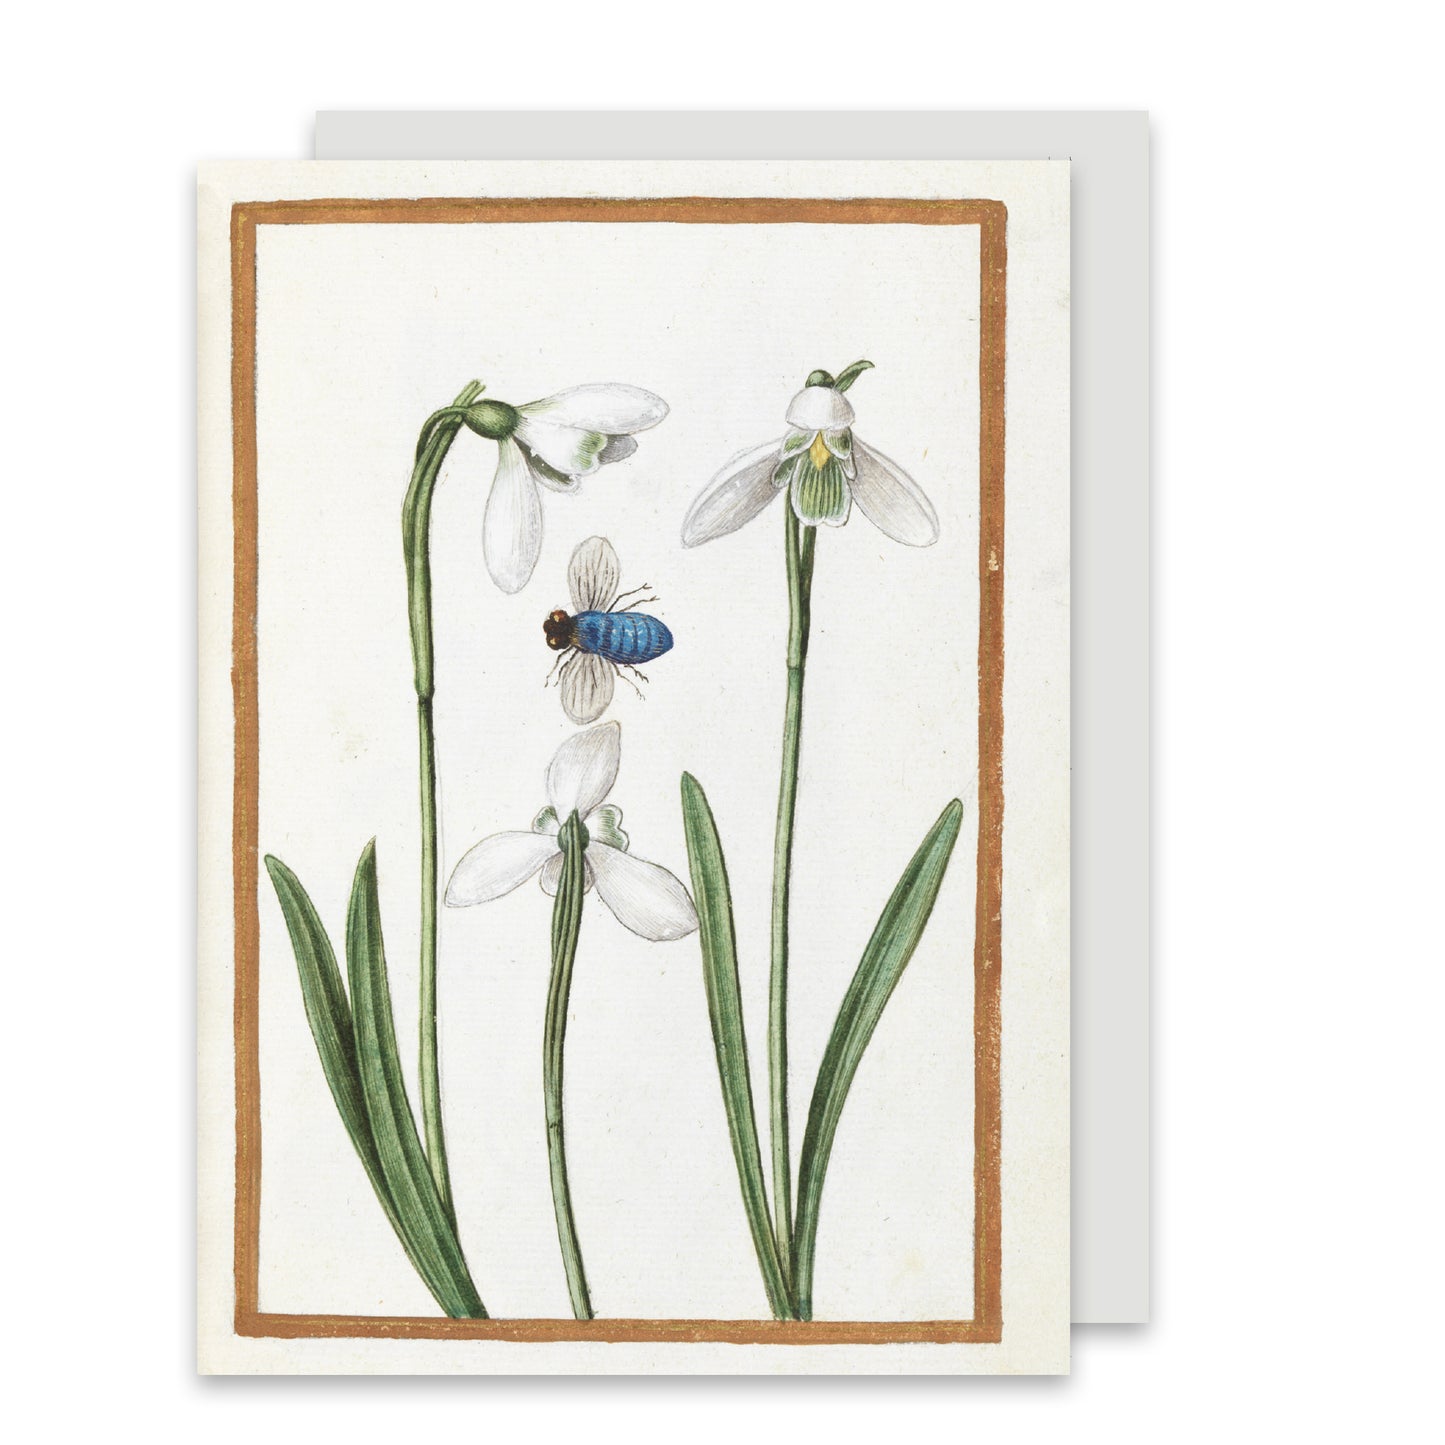 Galanthus nivalis (Snowdrops) - Greeting card